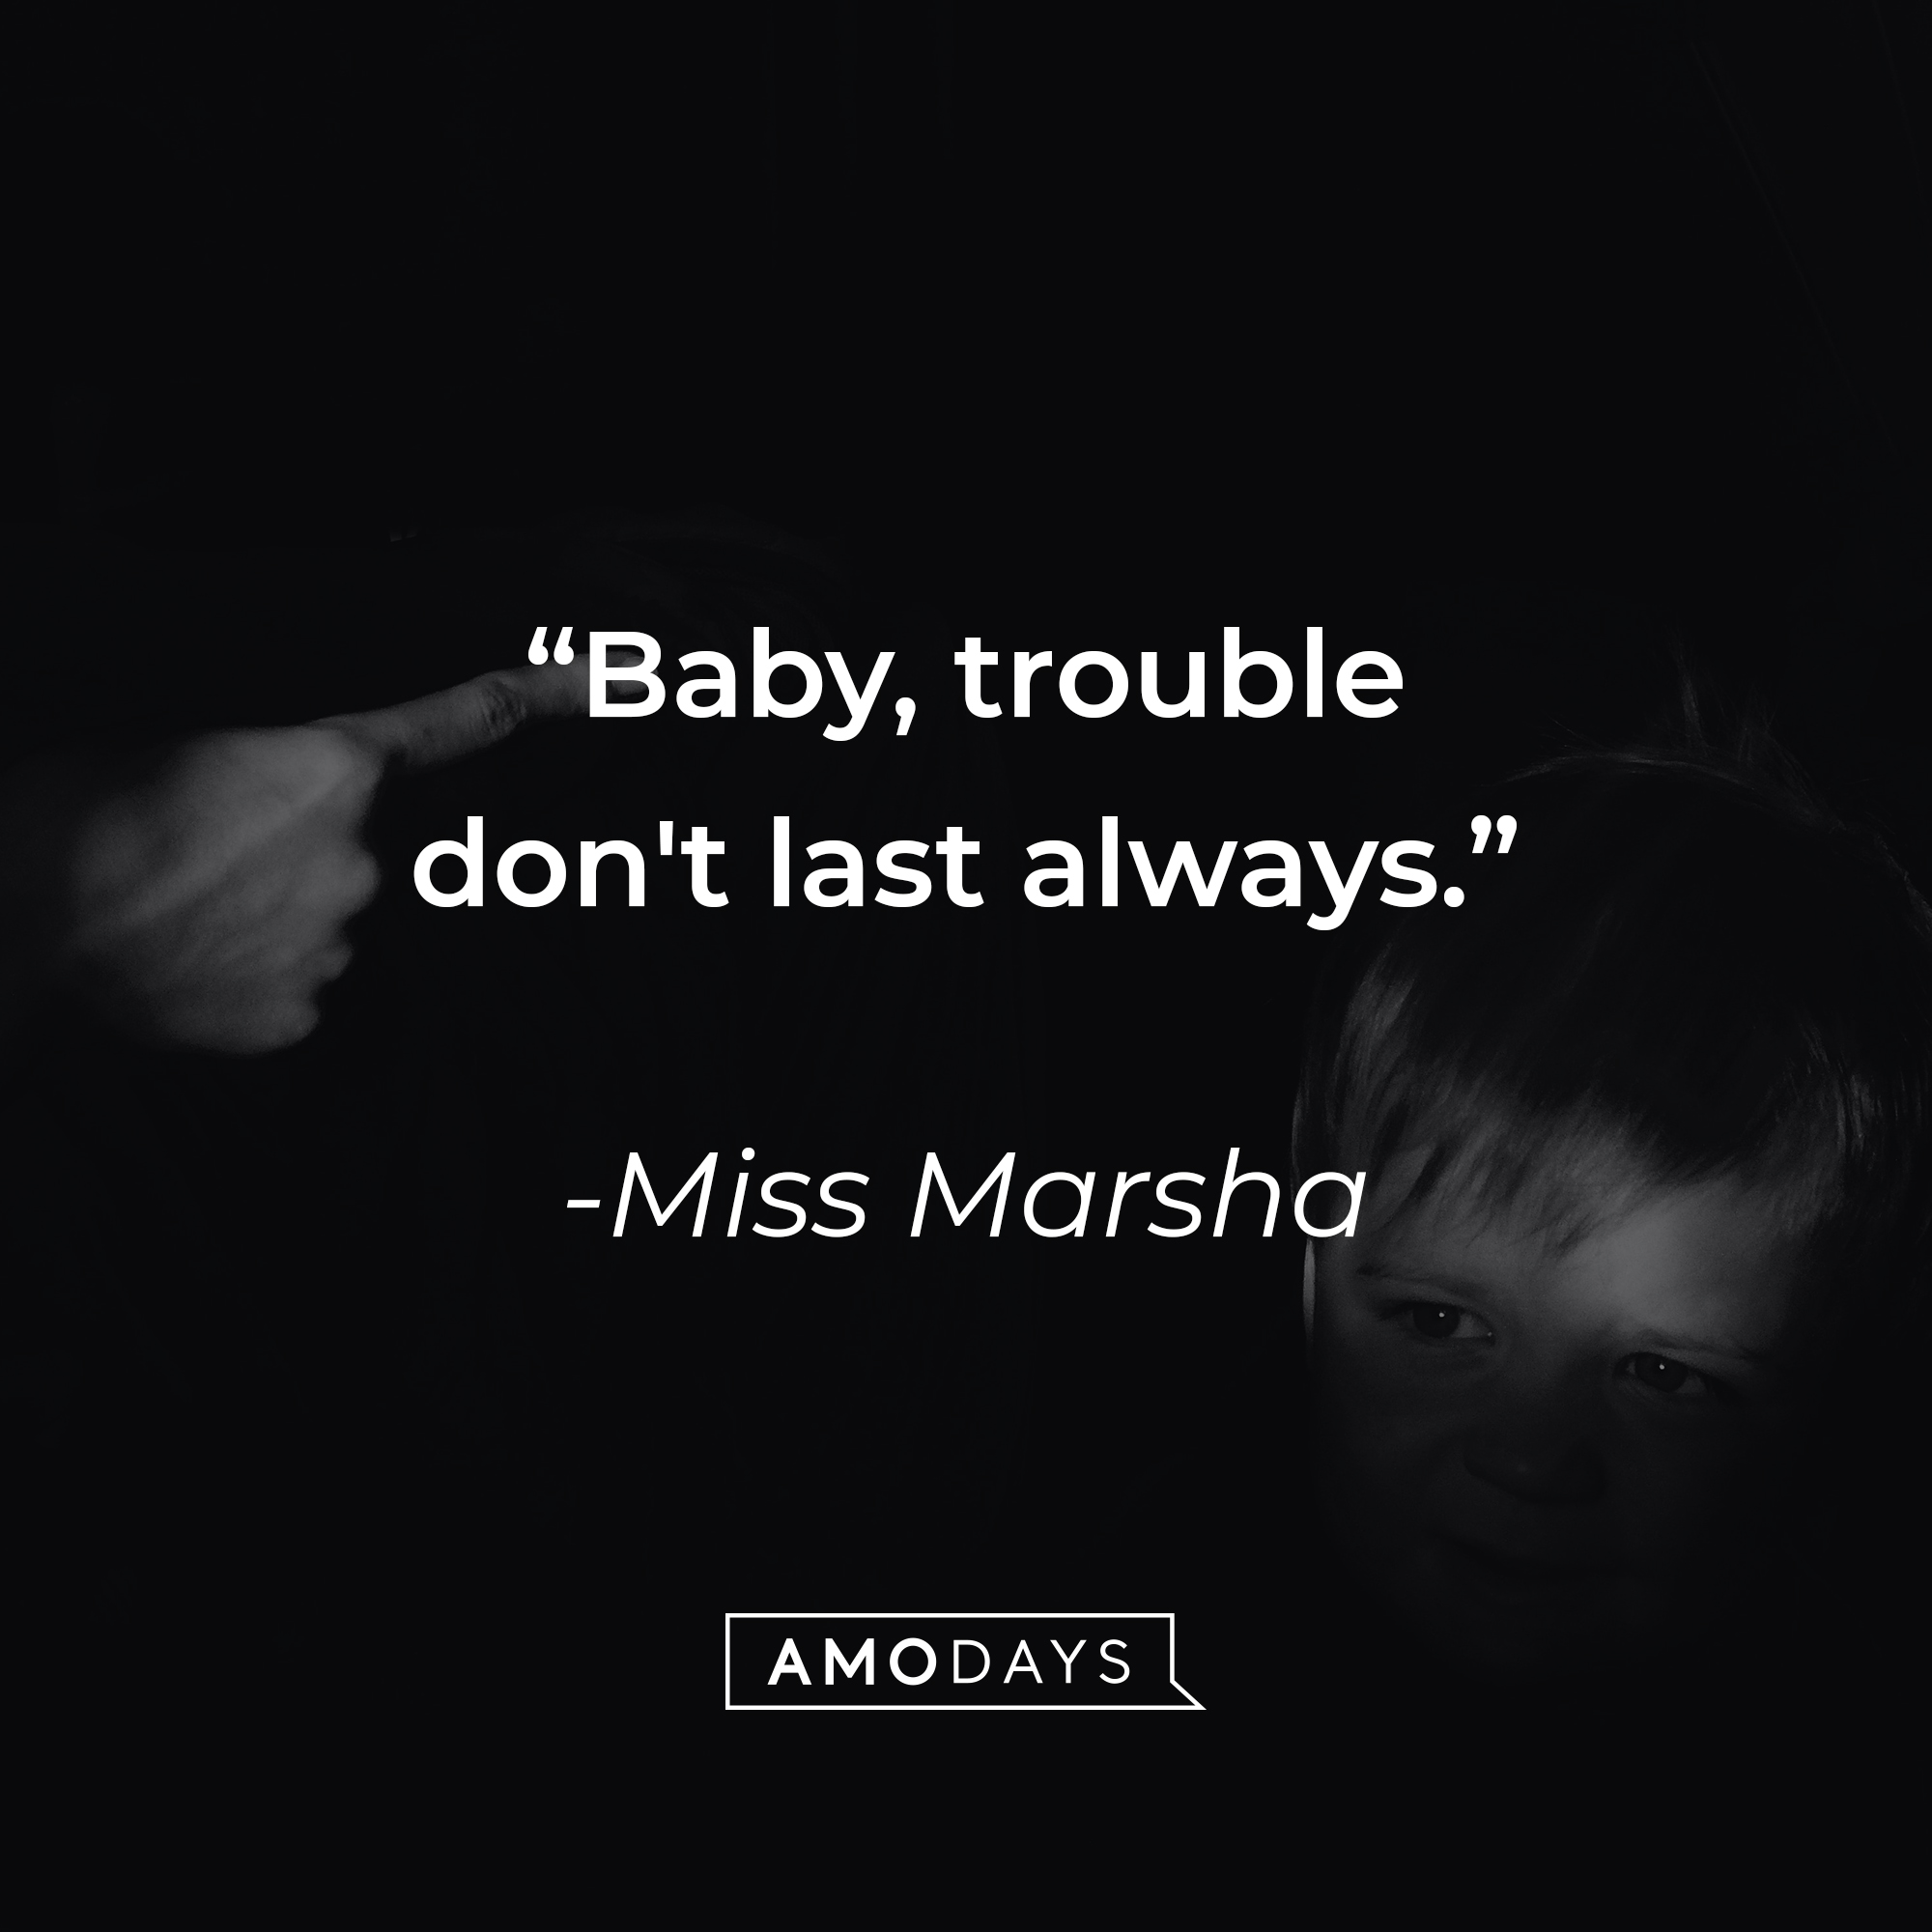 Miss Marsha's quote: "Baby, trouble don't last always." | Source: unsplash.com